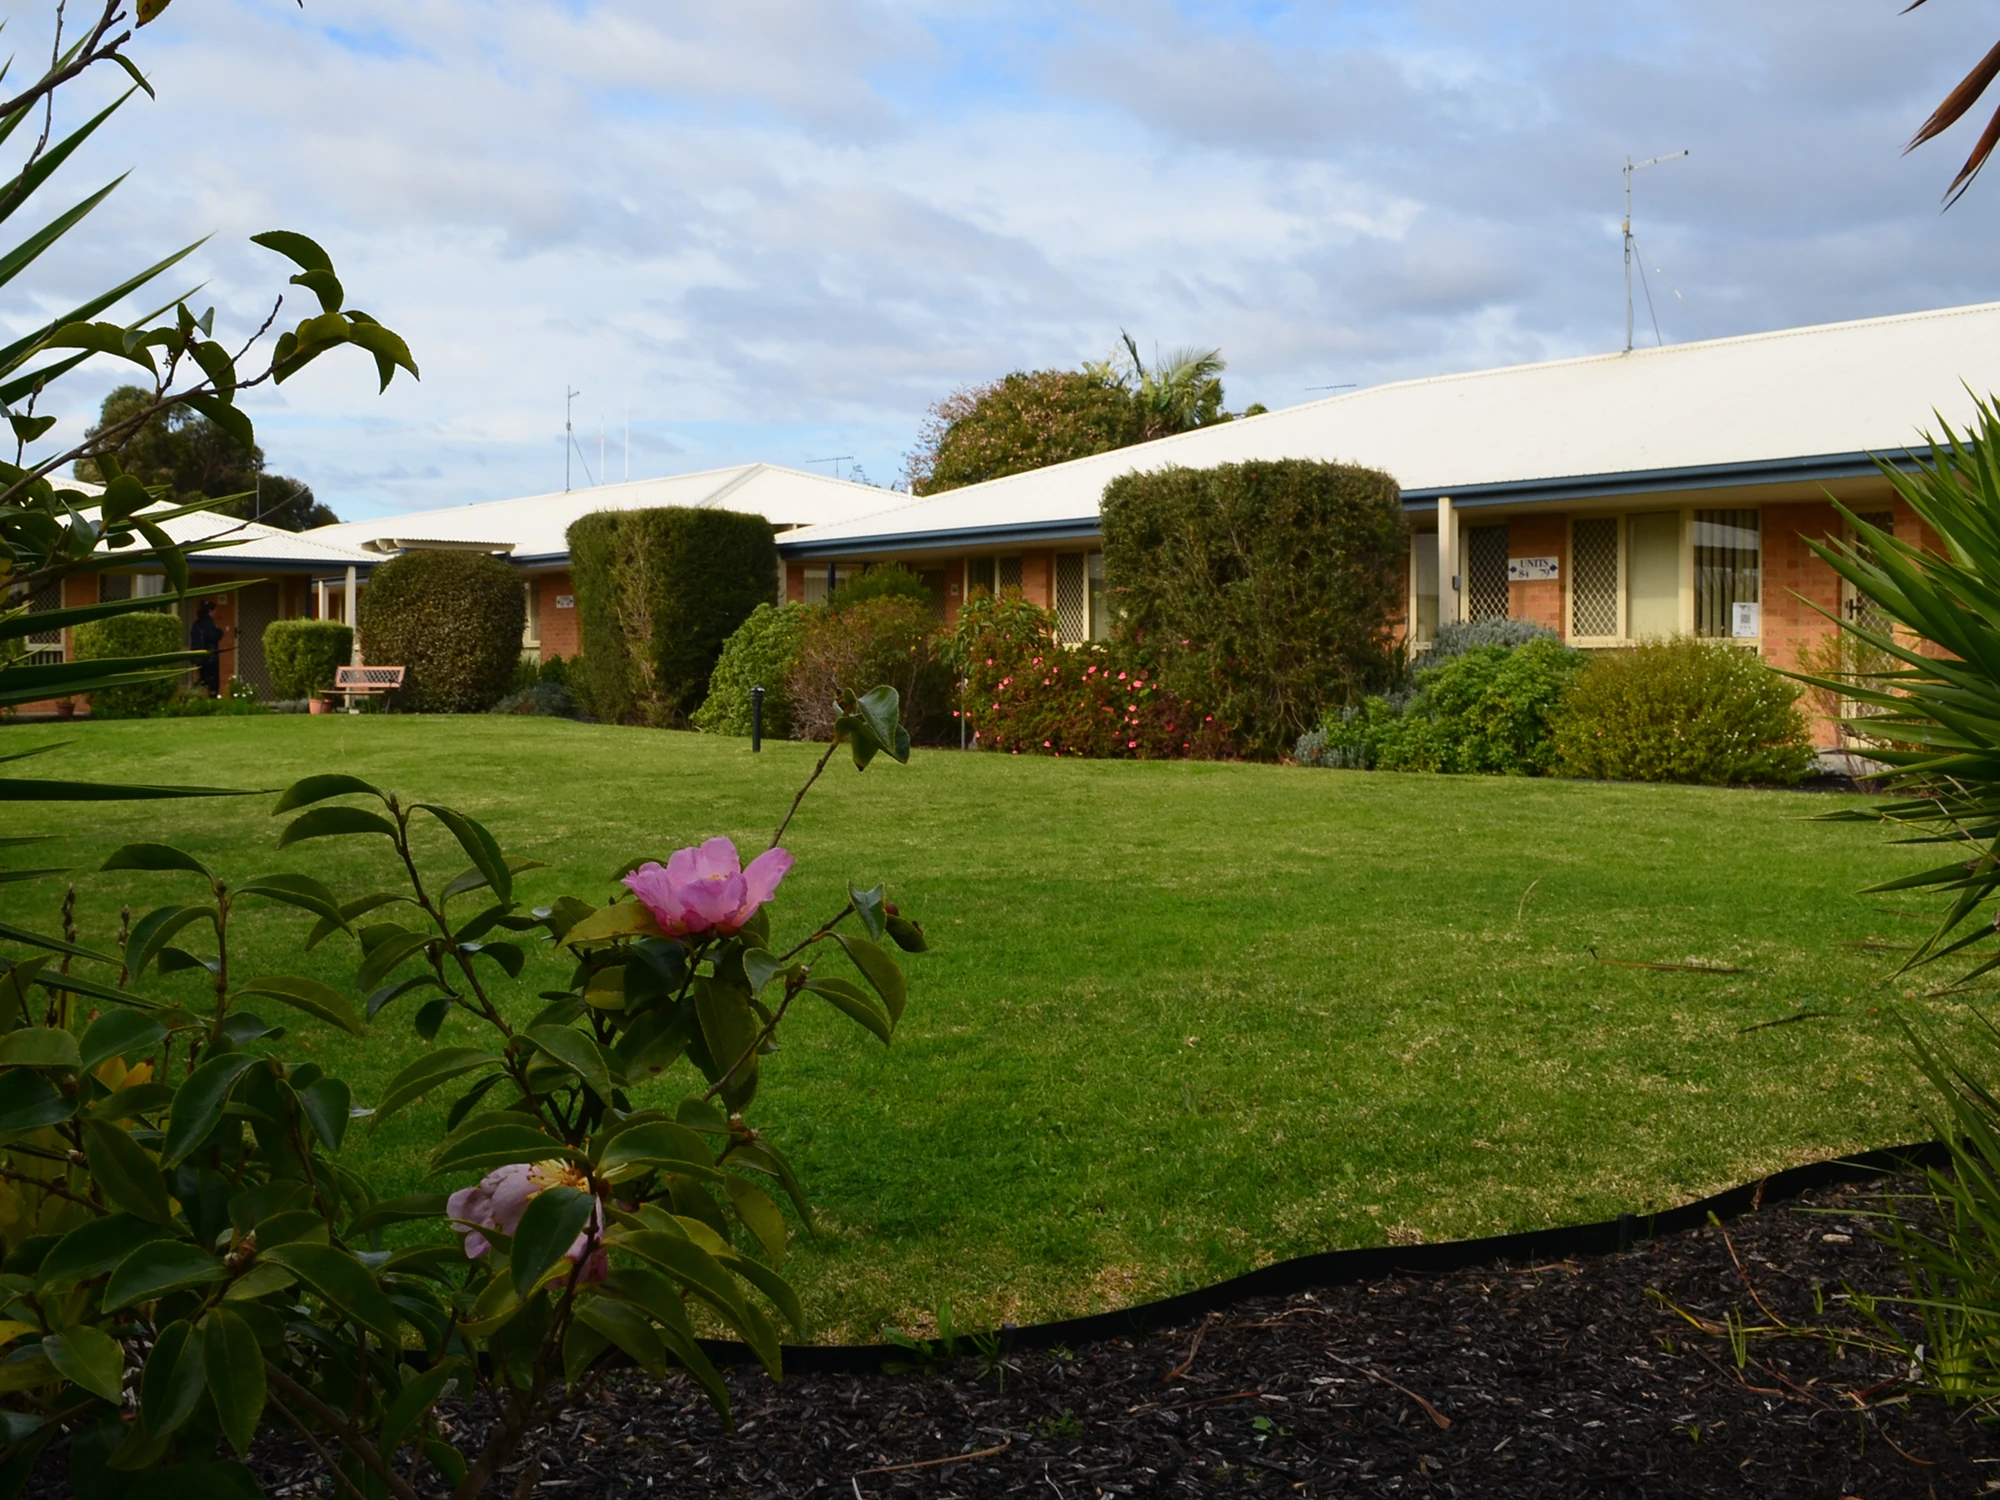 Ingenia Gardens Seniors Rental Community Geelong Victoria